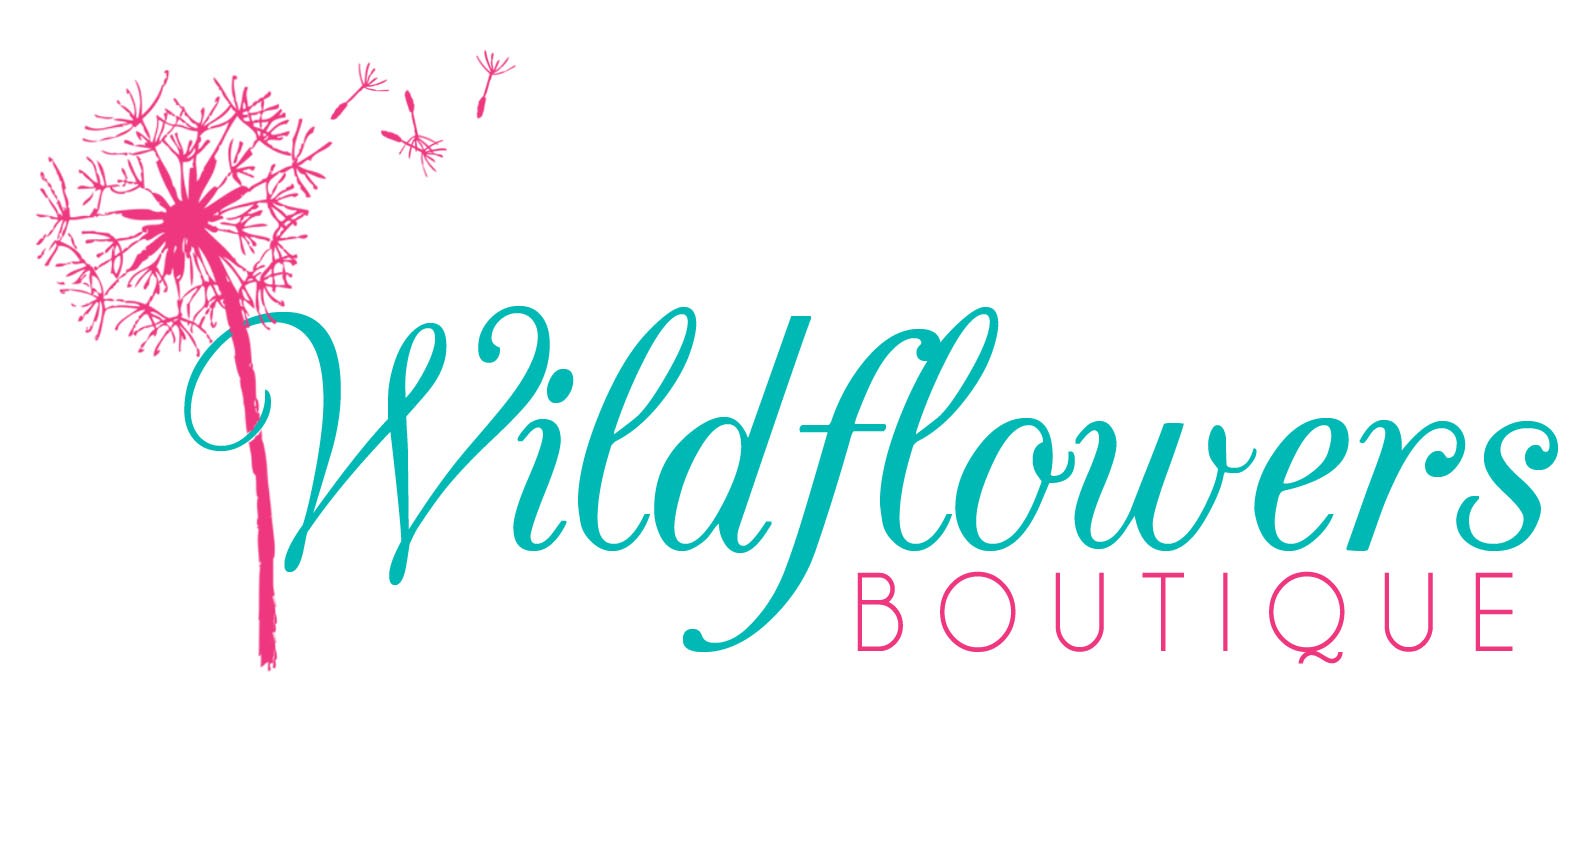 Wildflowers Boutique | LinkedIn